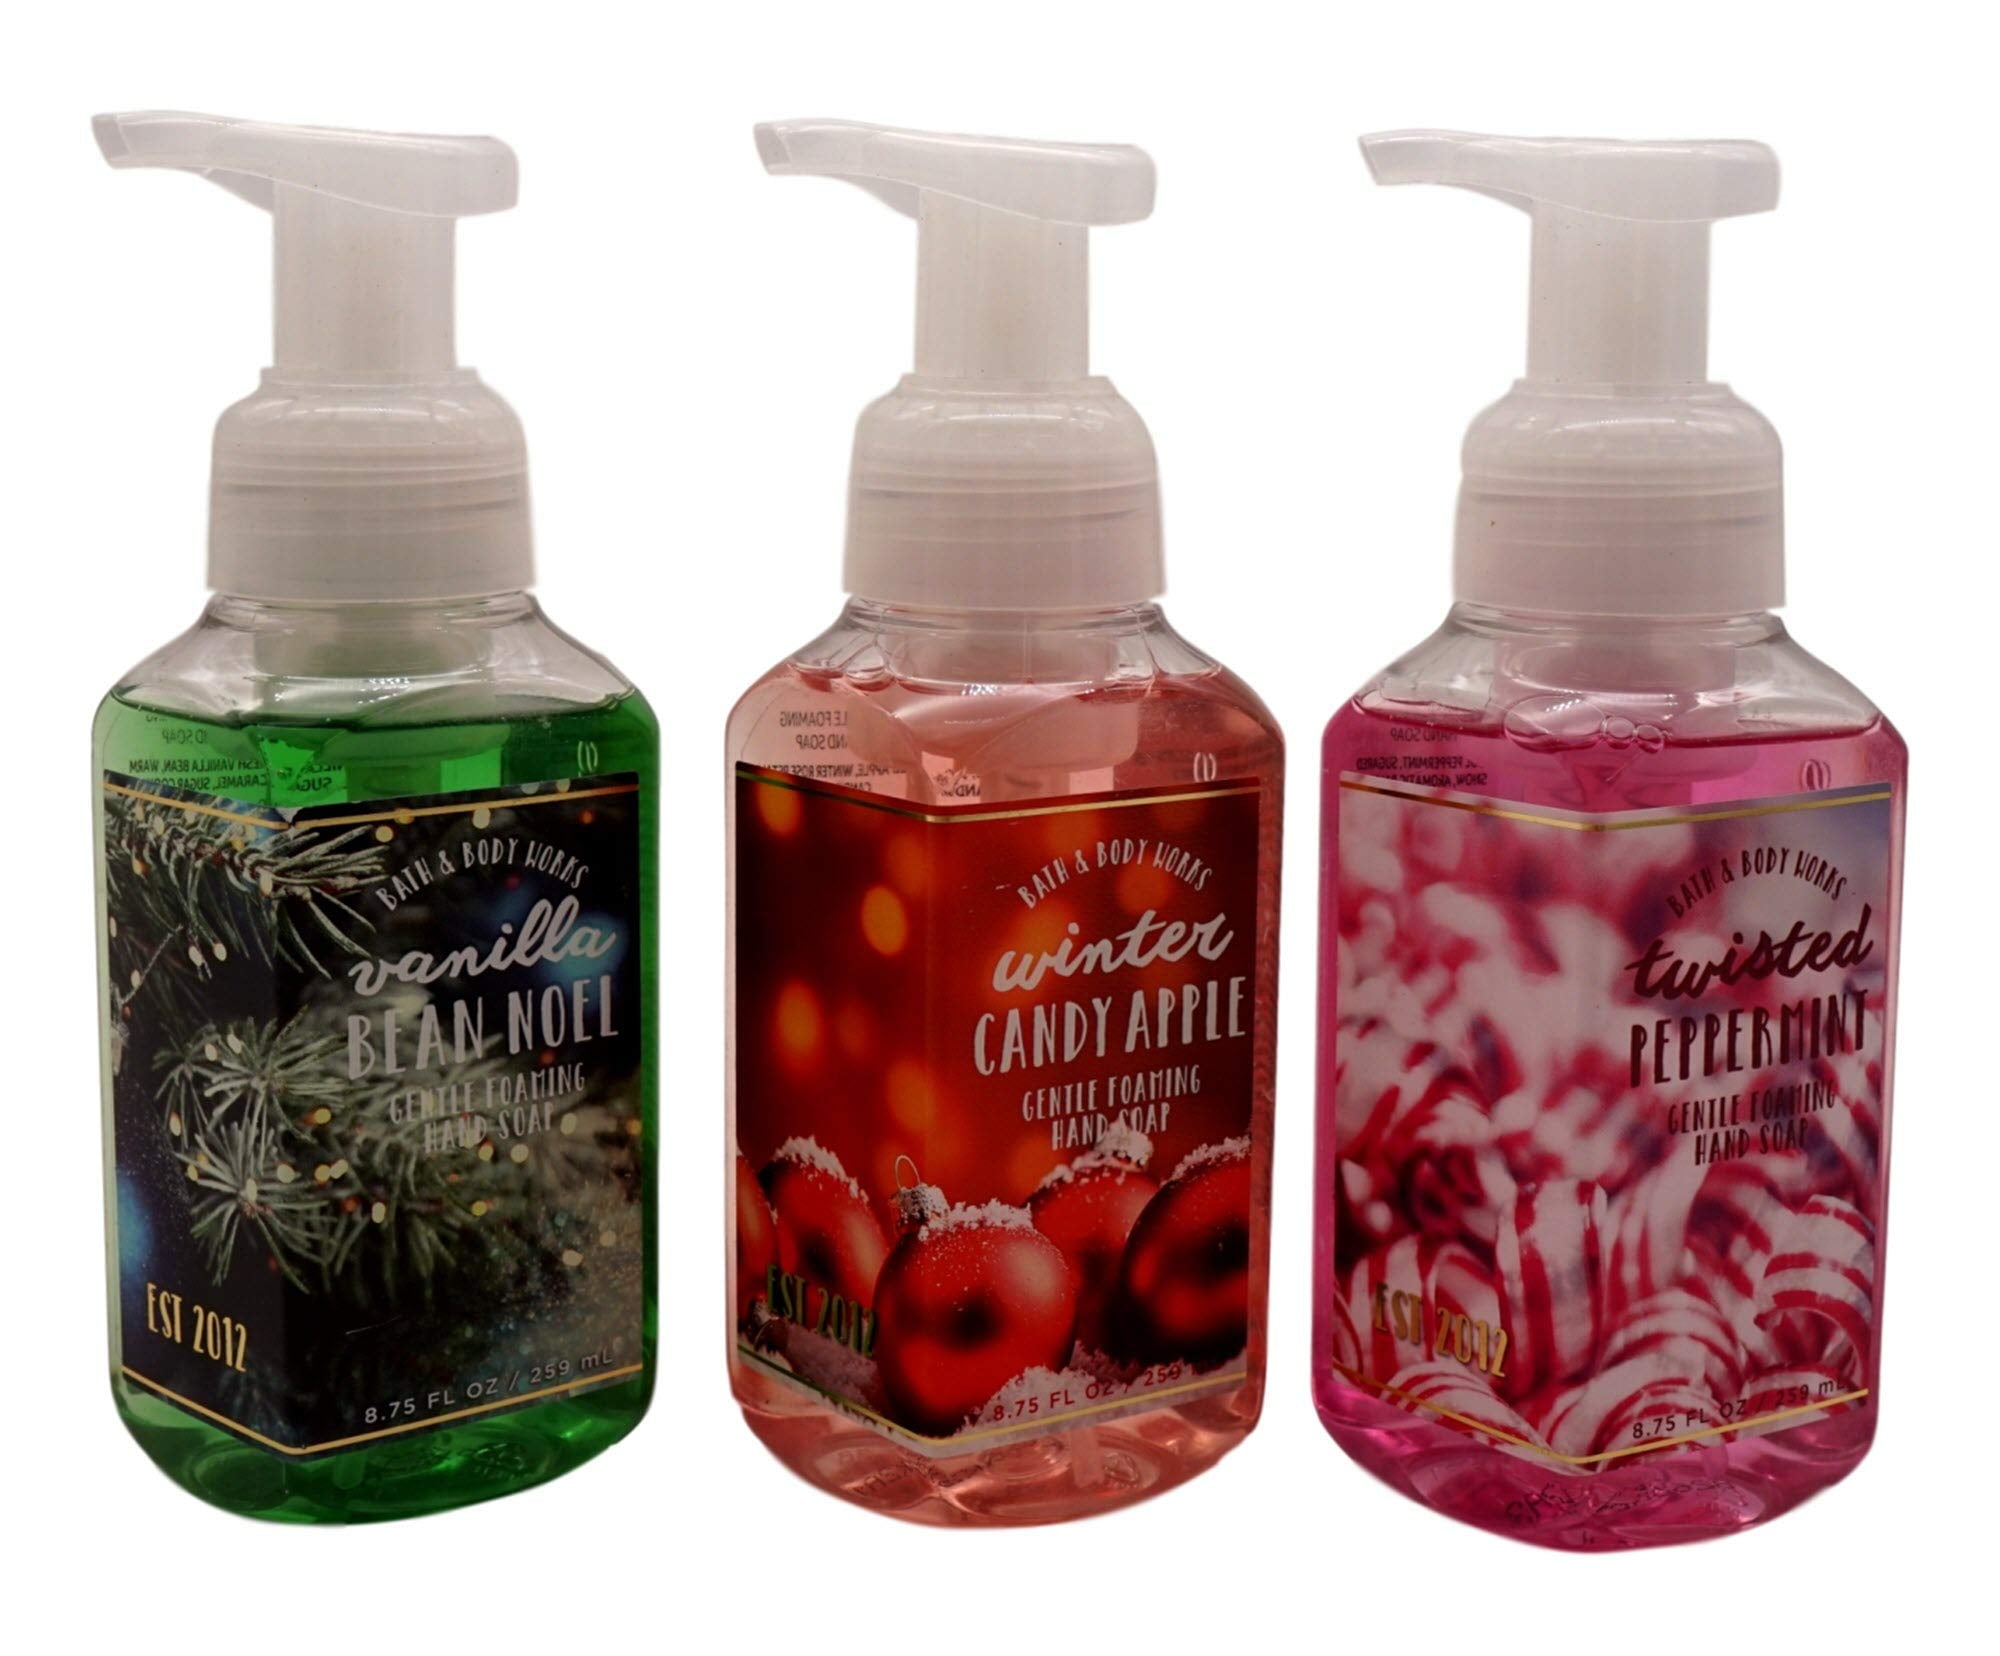 Winter Candy, Vanilla Bean Noel, Twisted Peppermint Hand Soap (3 Pack) -  Walmart.com